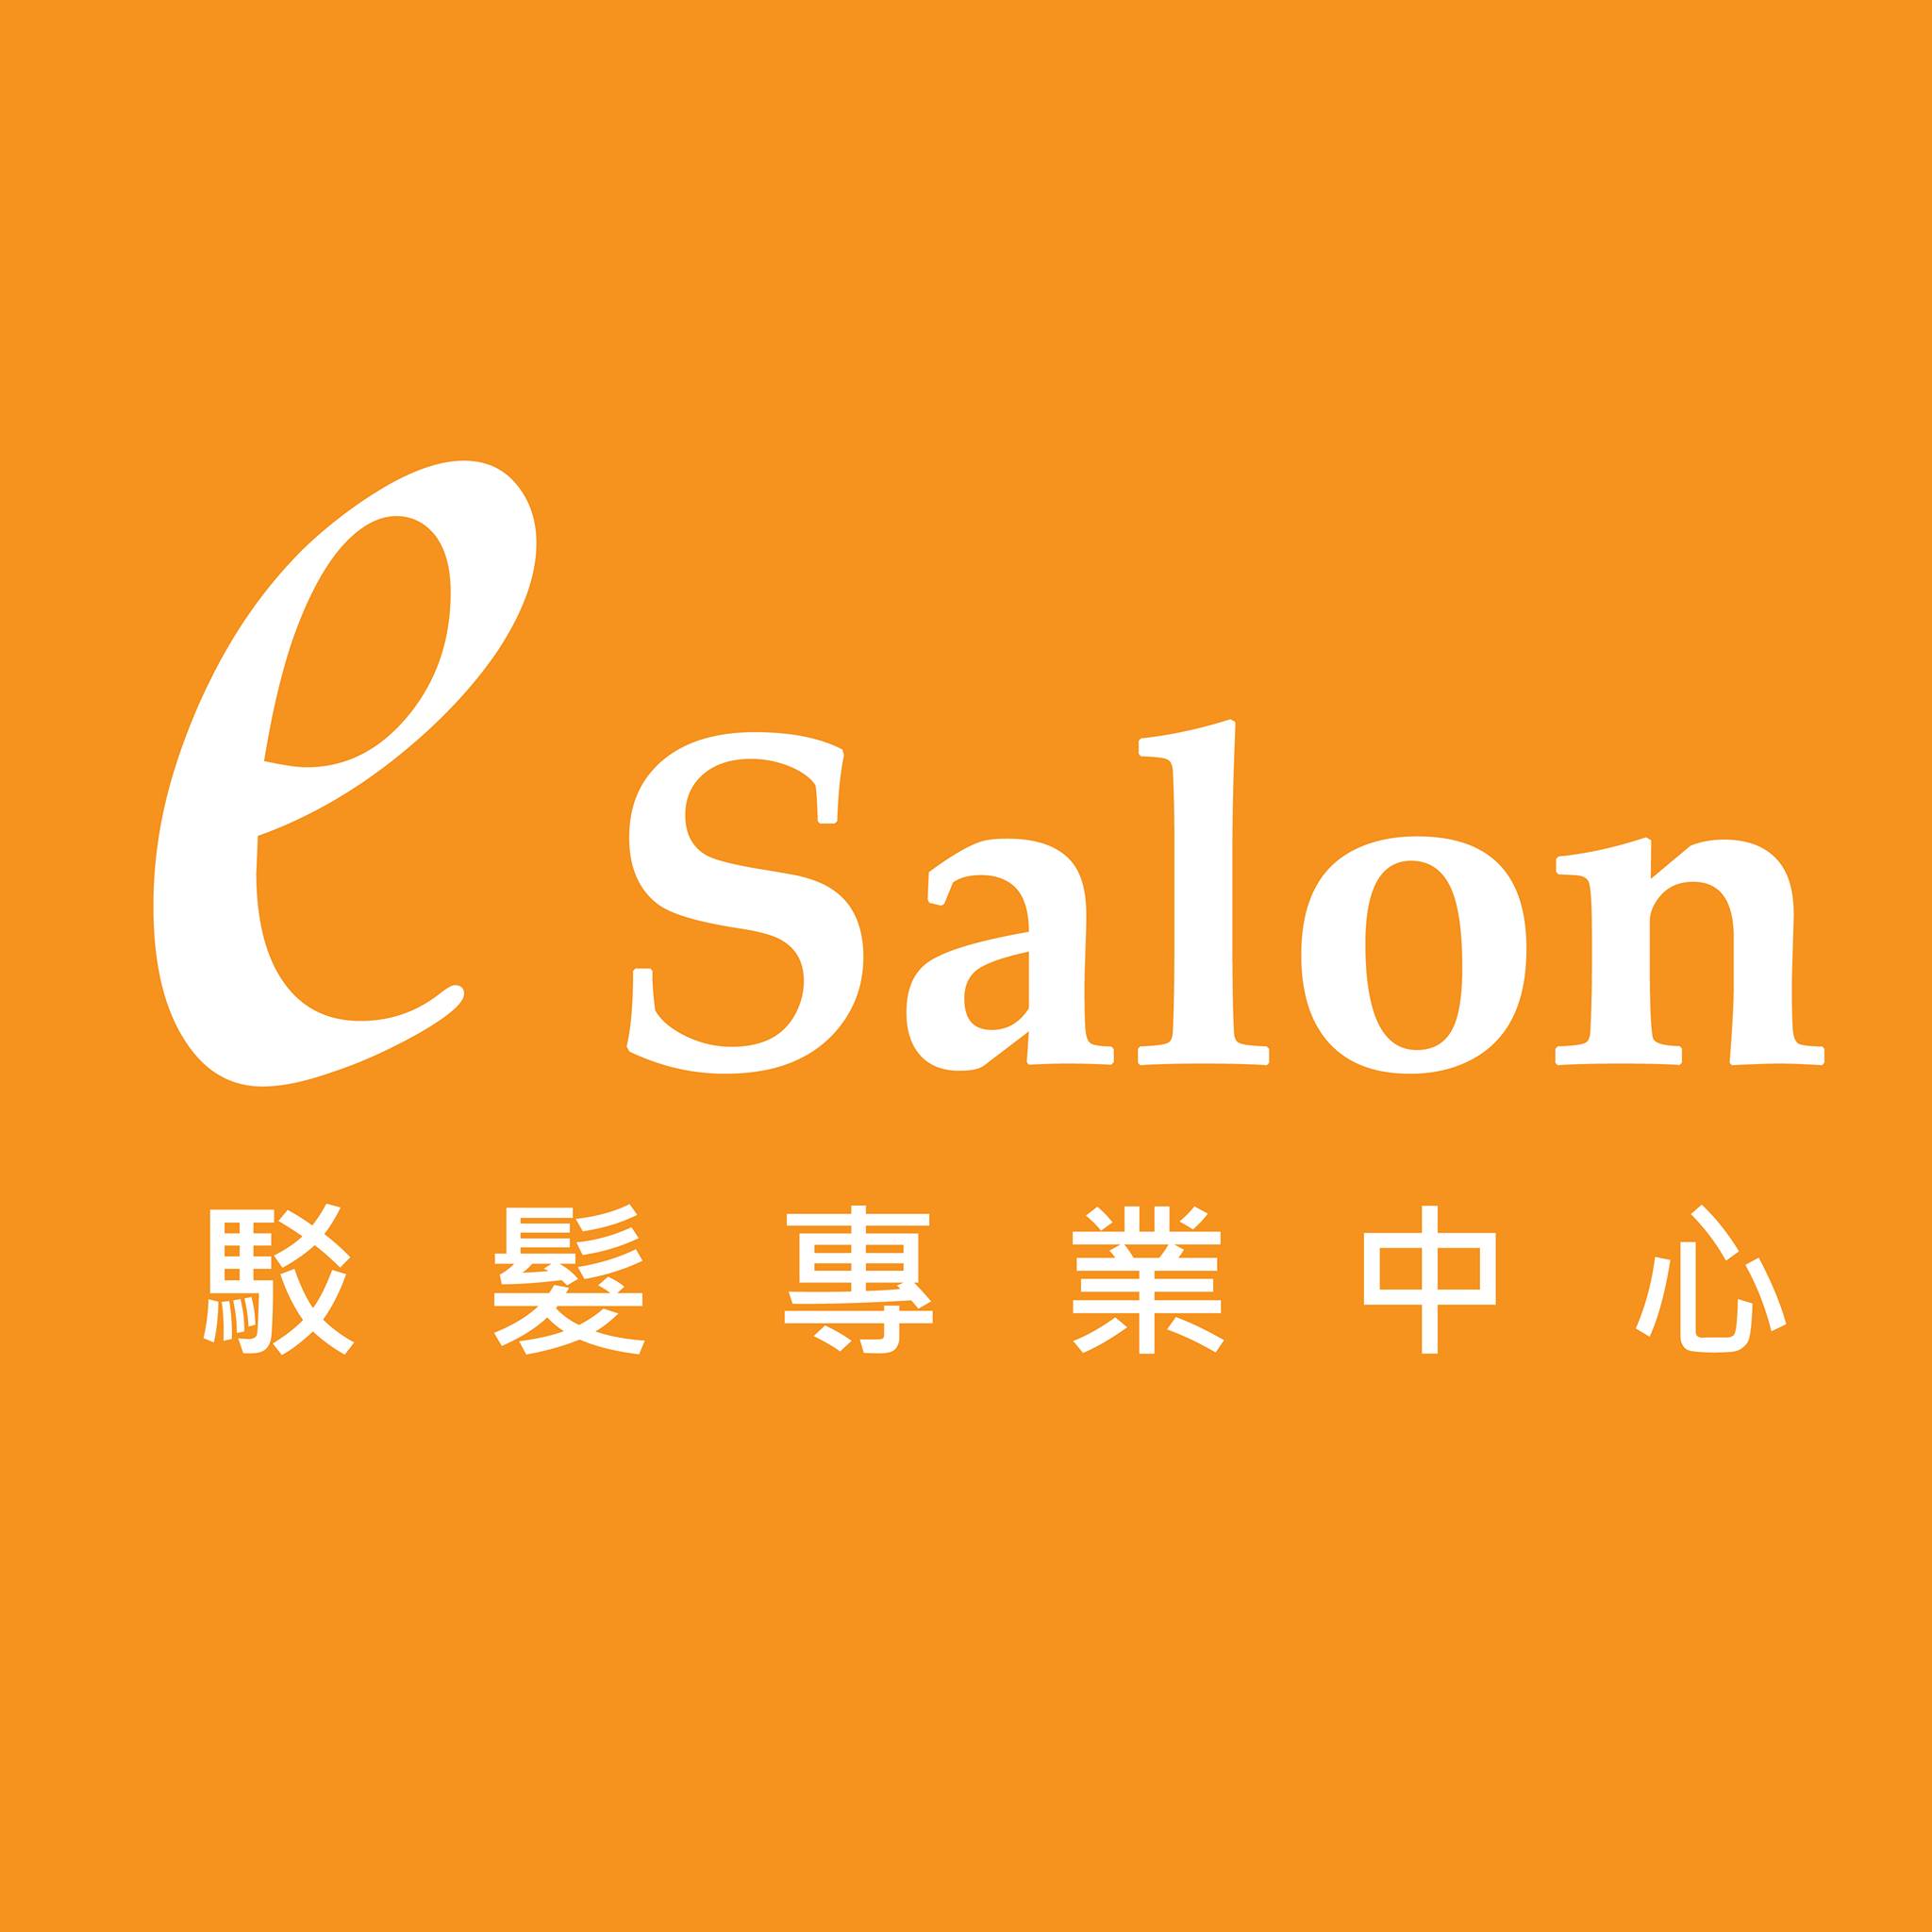 Hair Transplant: E Salon Station 駁髪專業中心